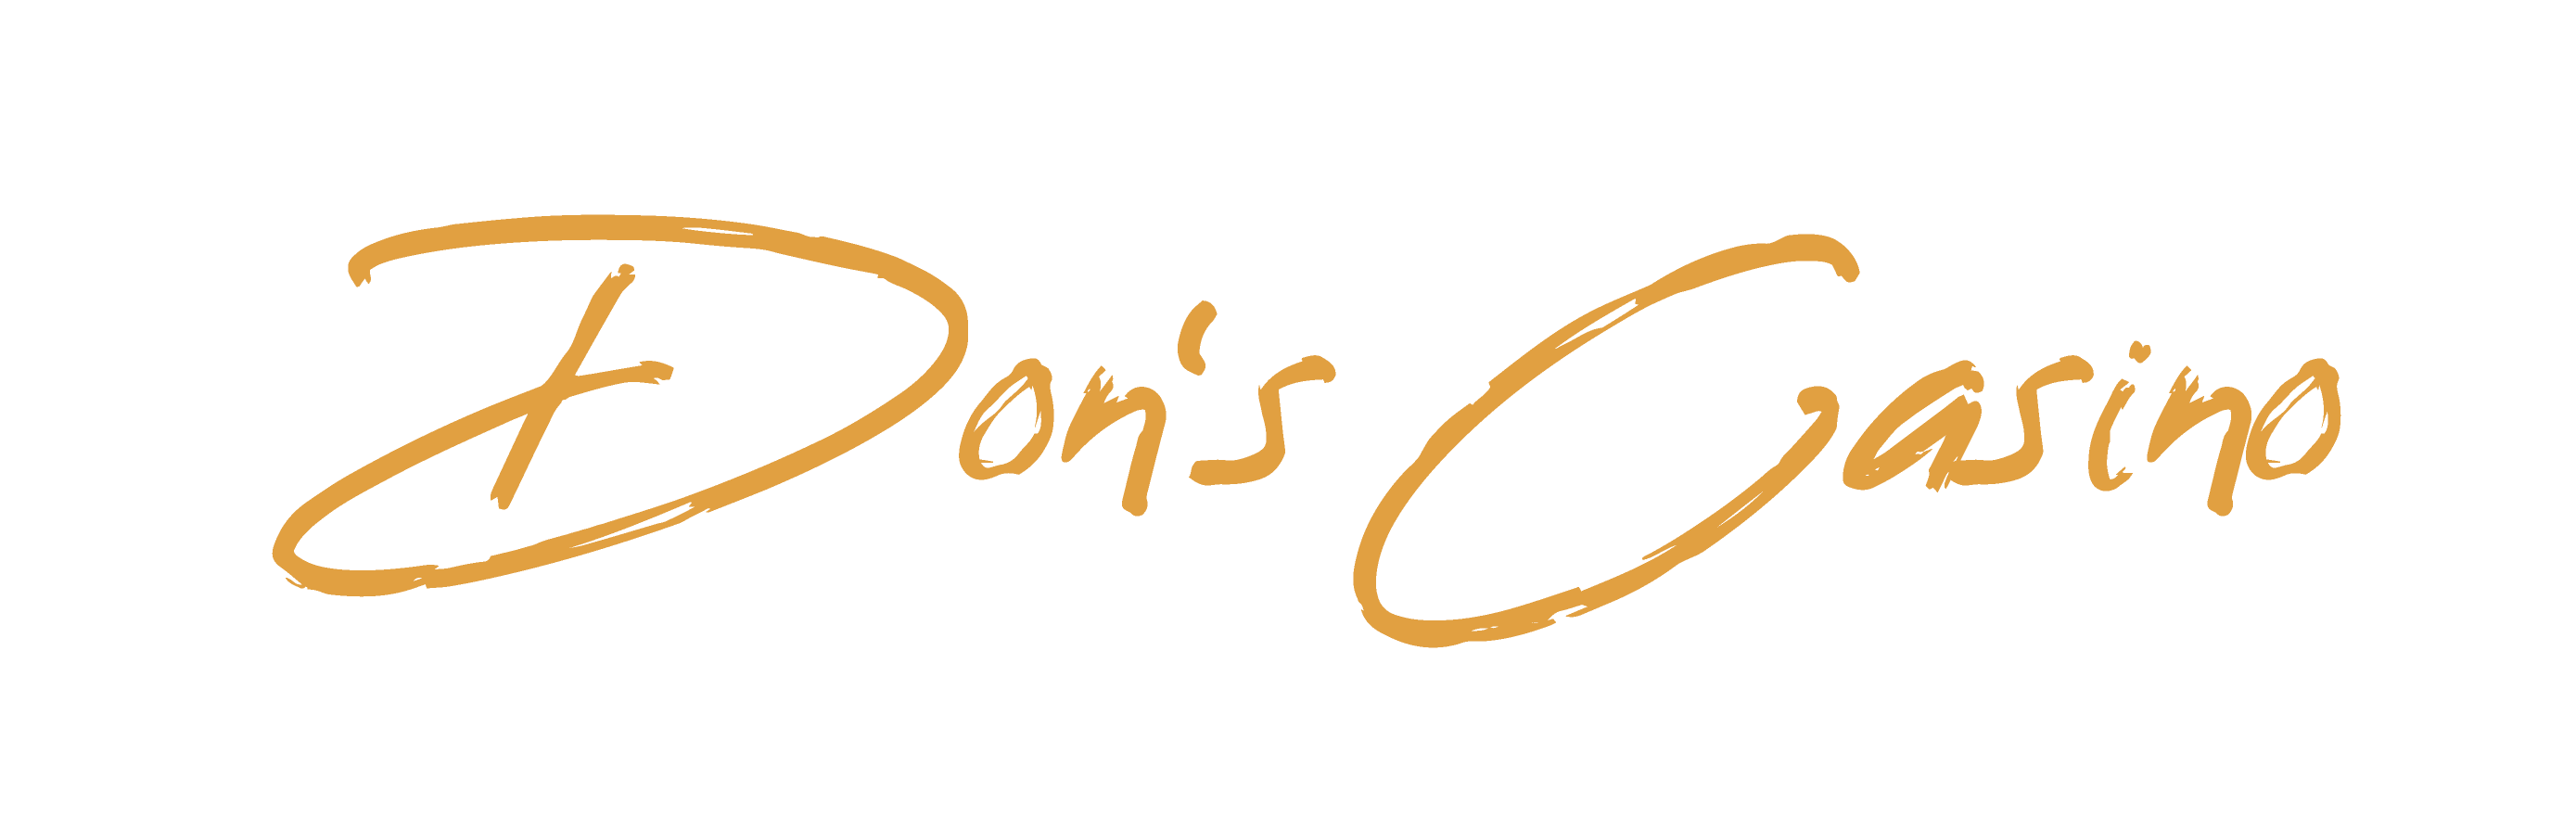 Don's Casino Logo